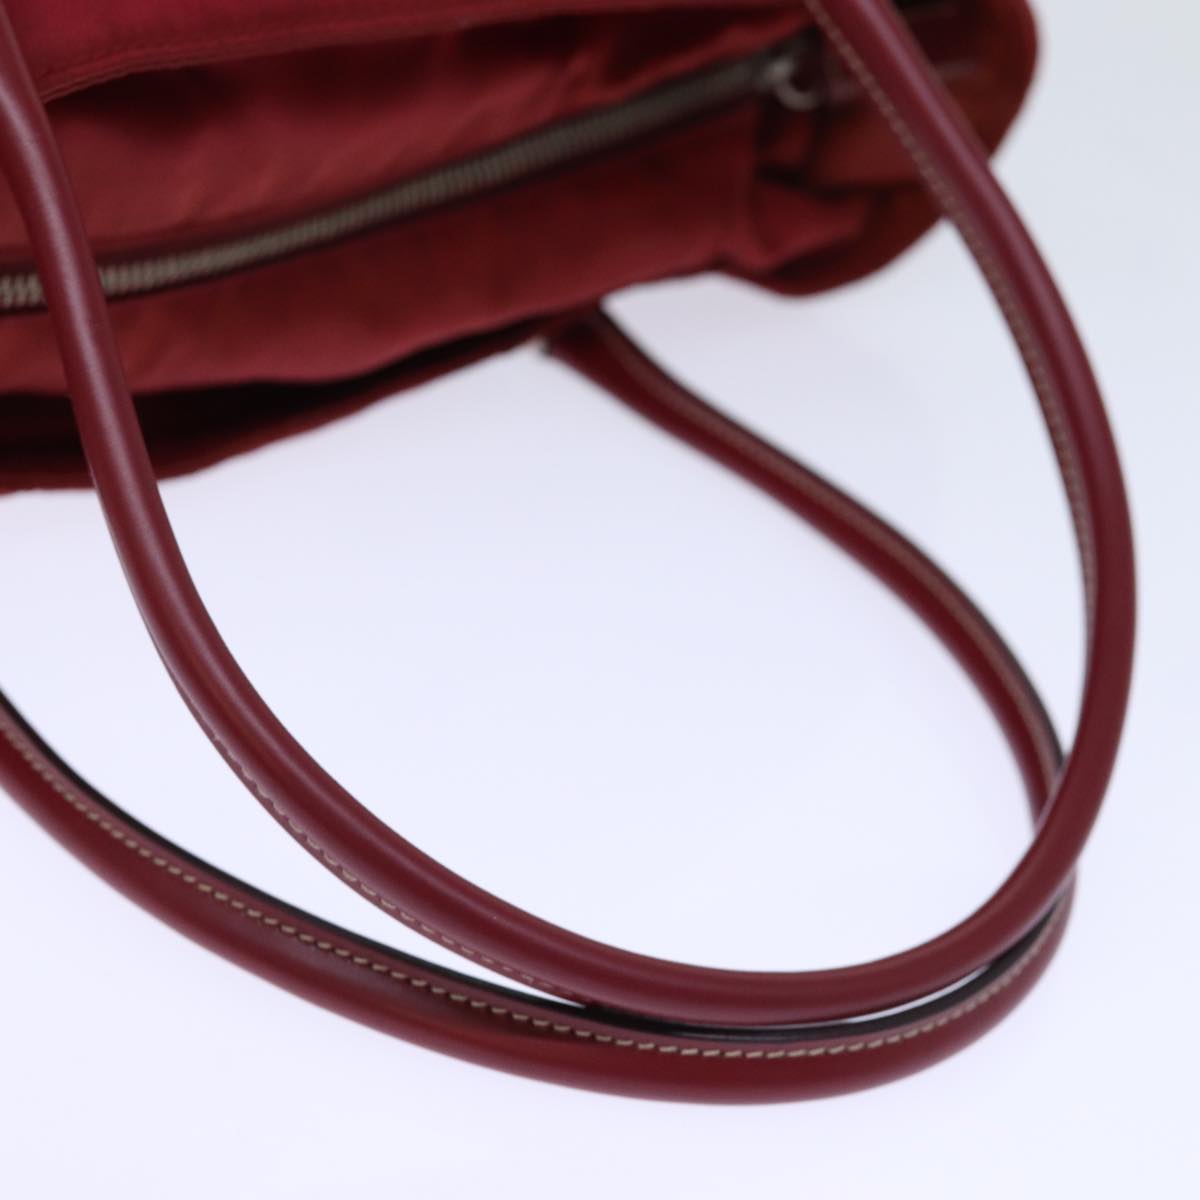 PRADA Hand Bag Nylon Red Auth 72552